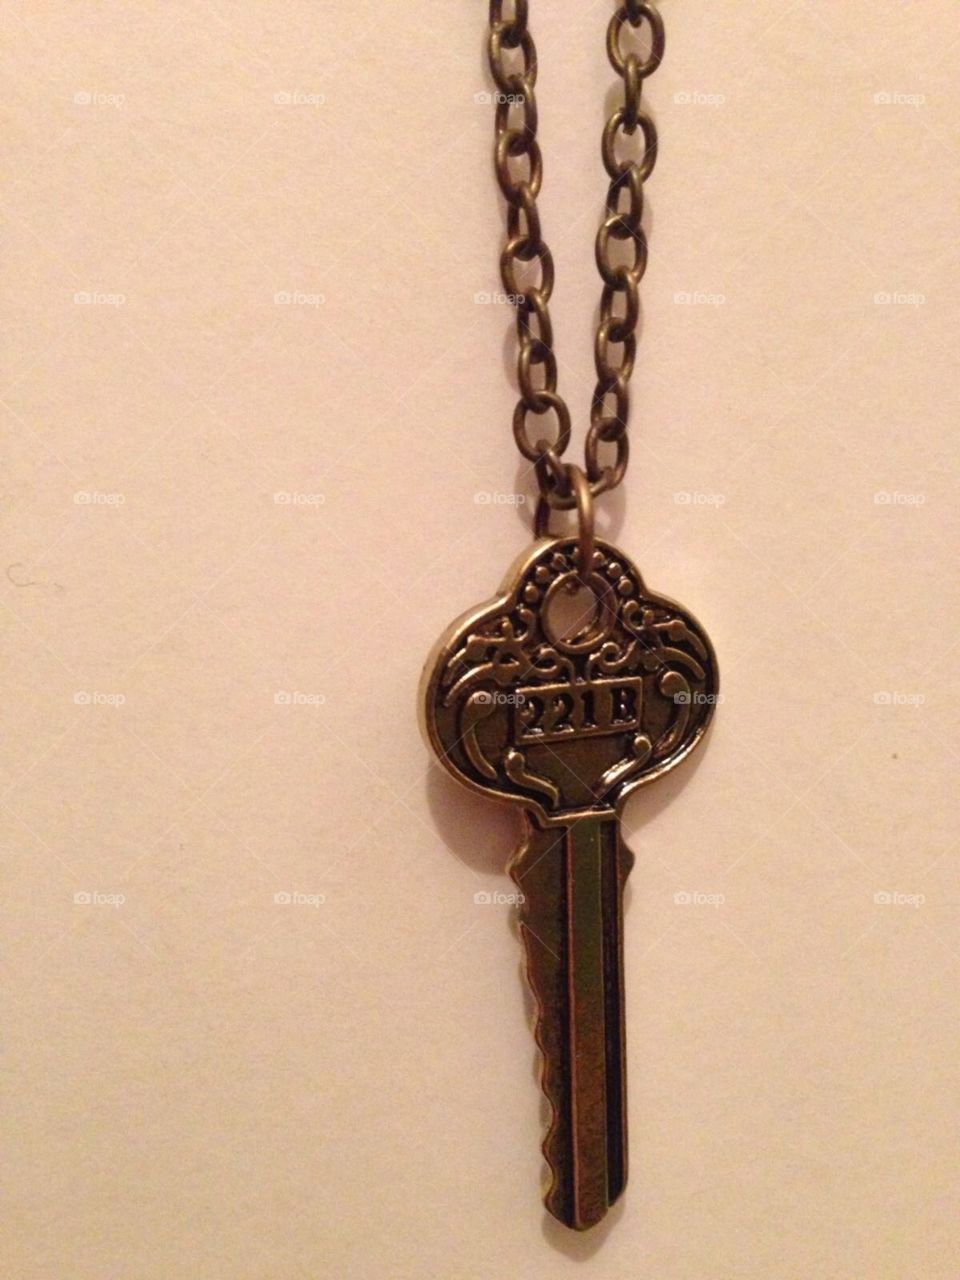 Sherlock key